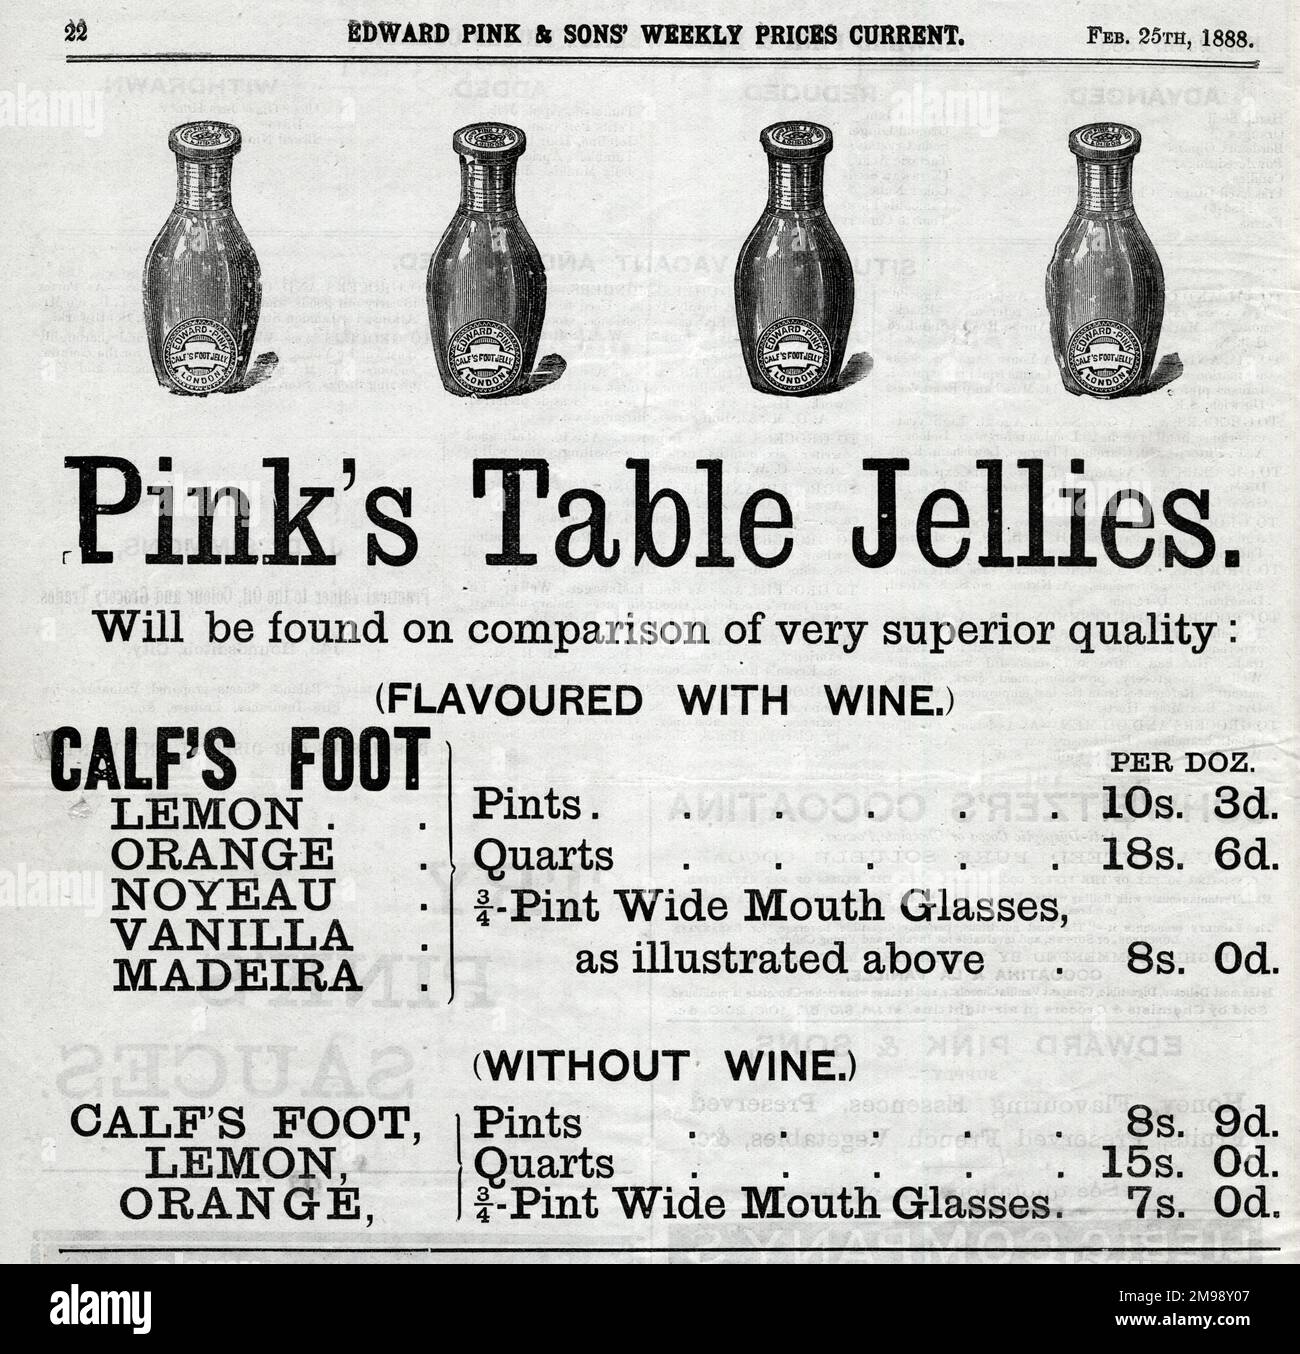 Advert, Edward Pink's Table Jellies. Stock Photo